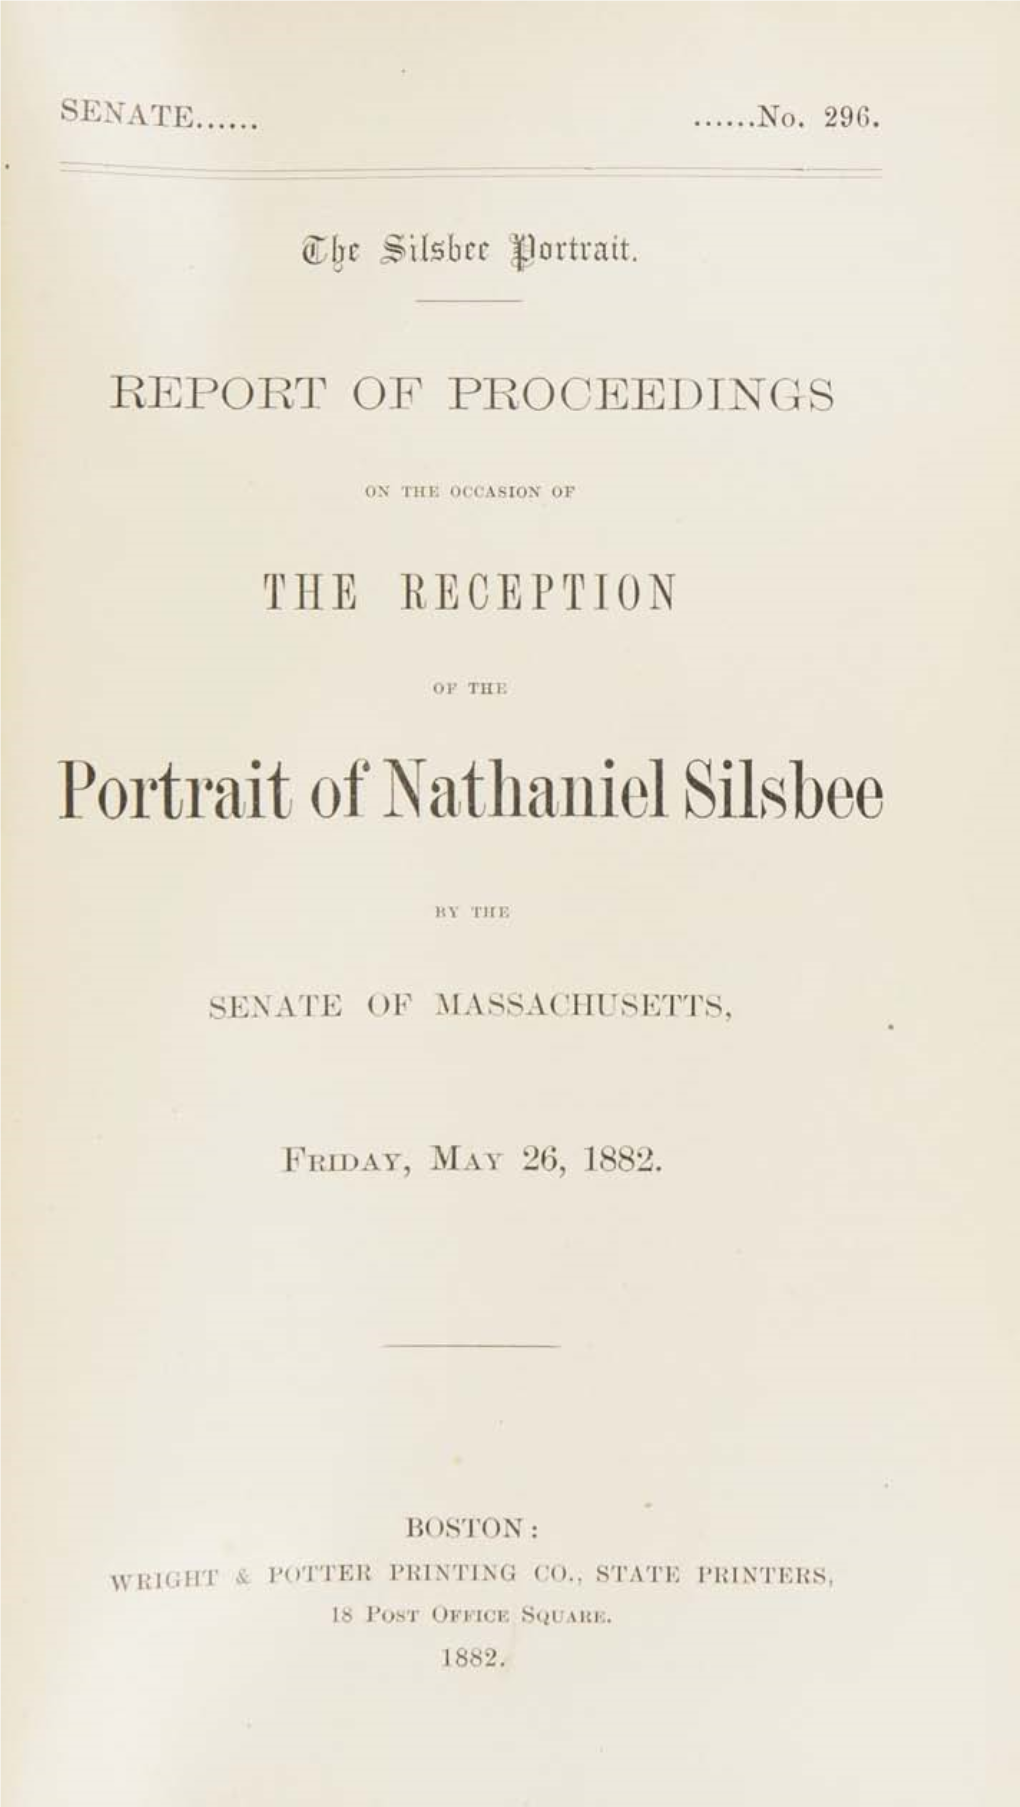 Portrait of Nathaniel Silsbee